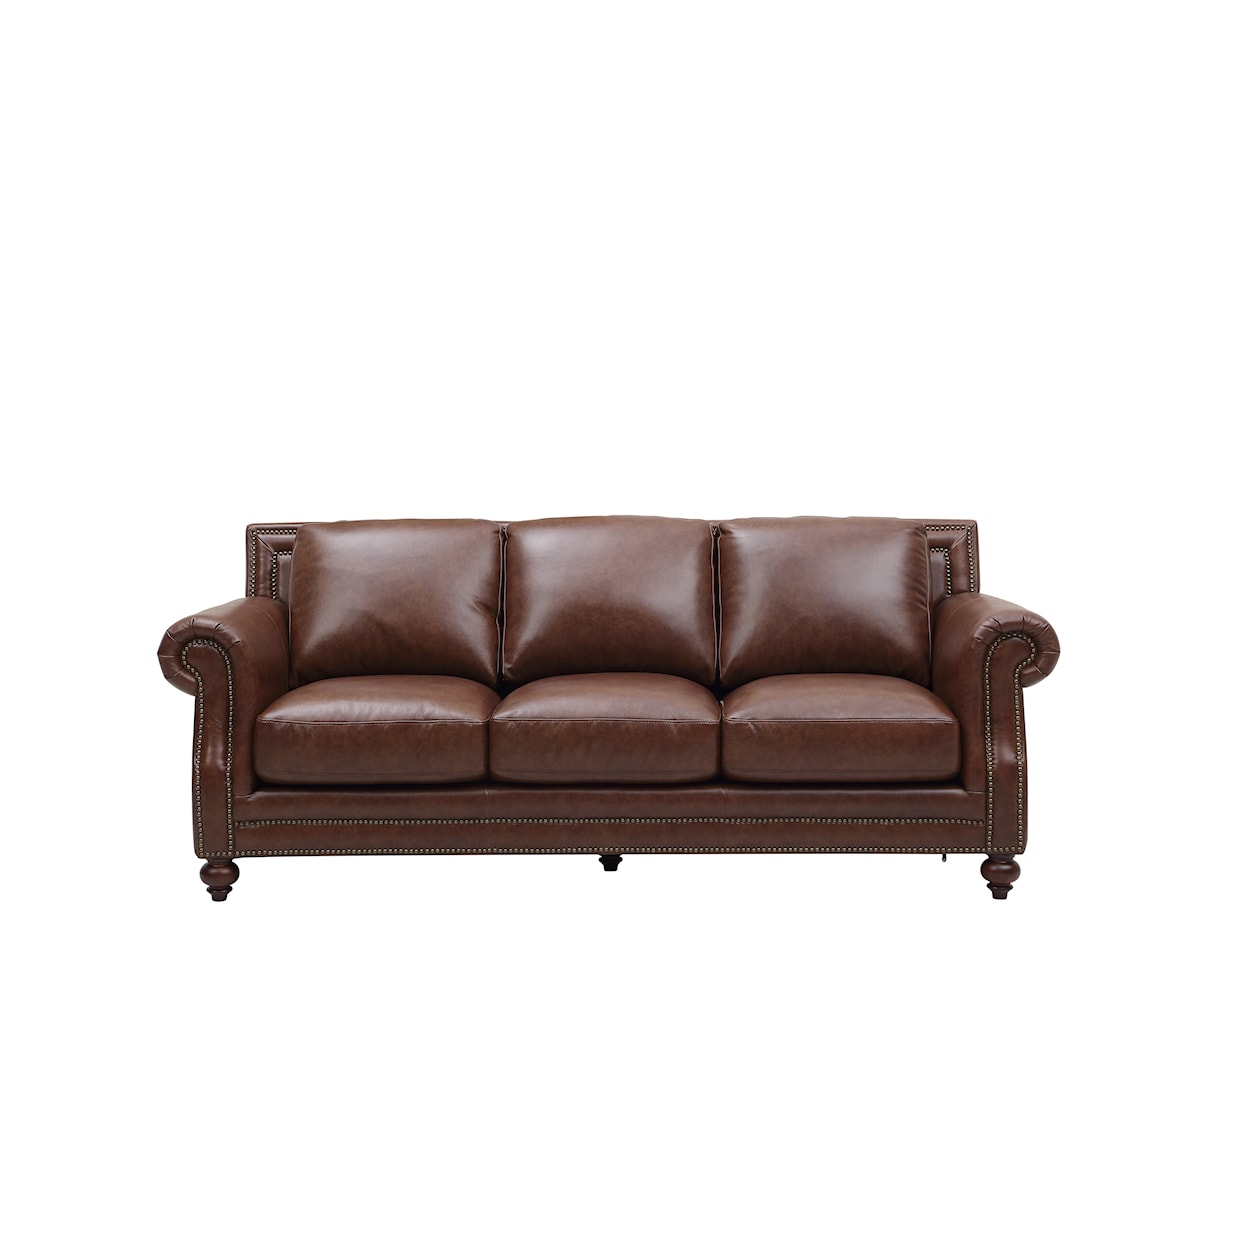 Carolina Leather Georgetowne Bayliss Sofa